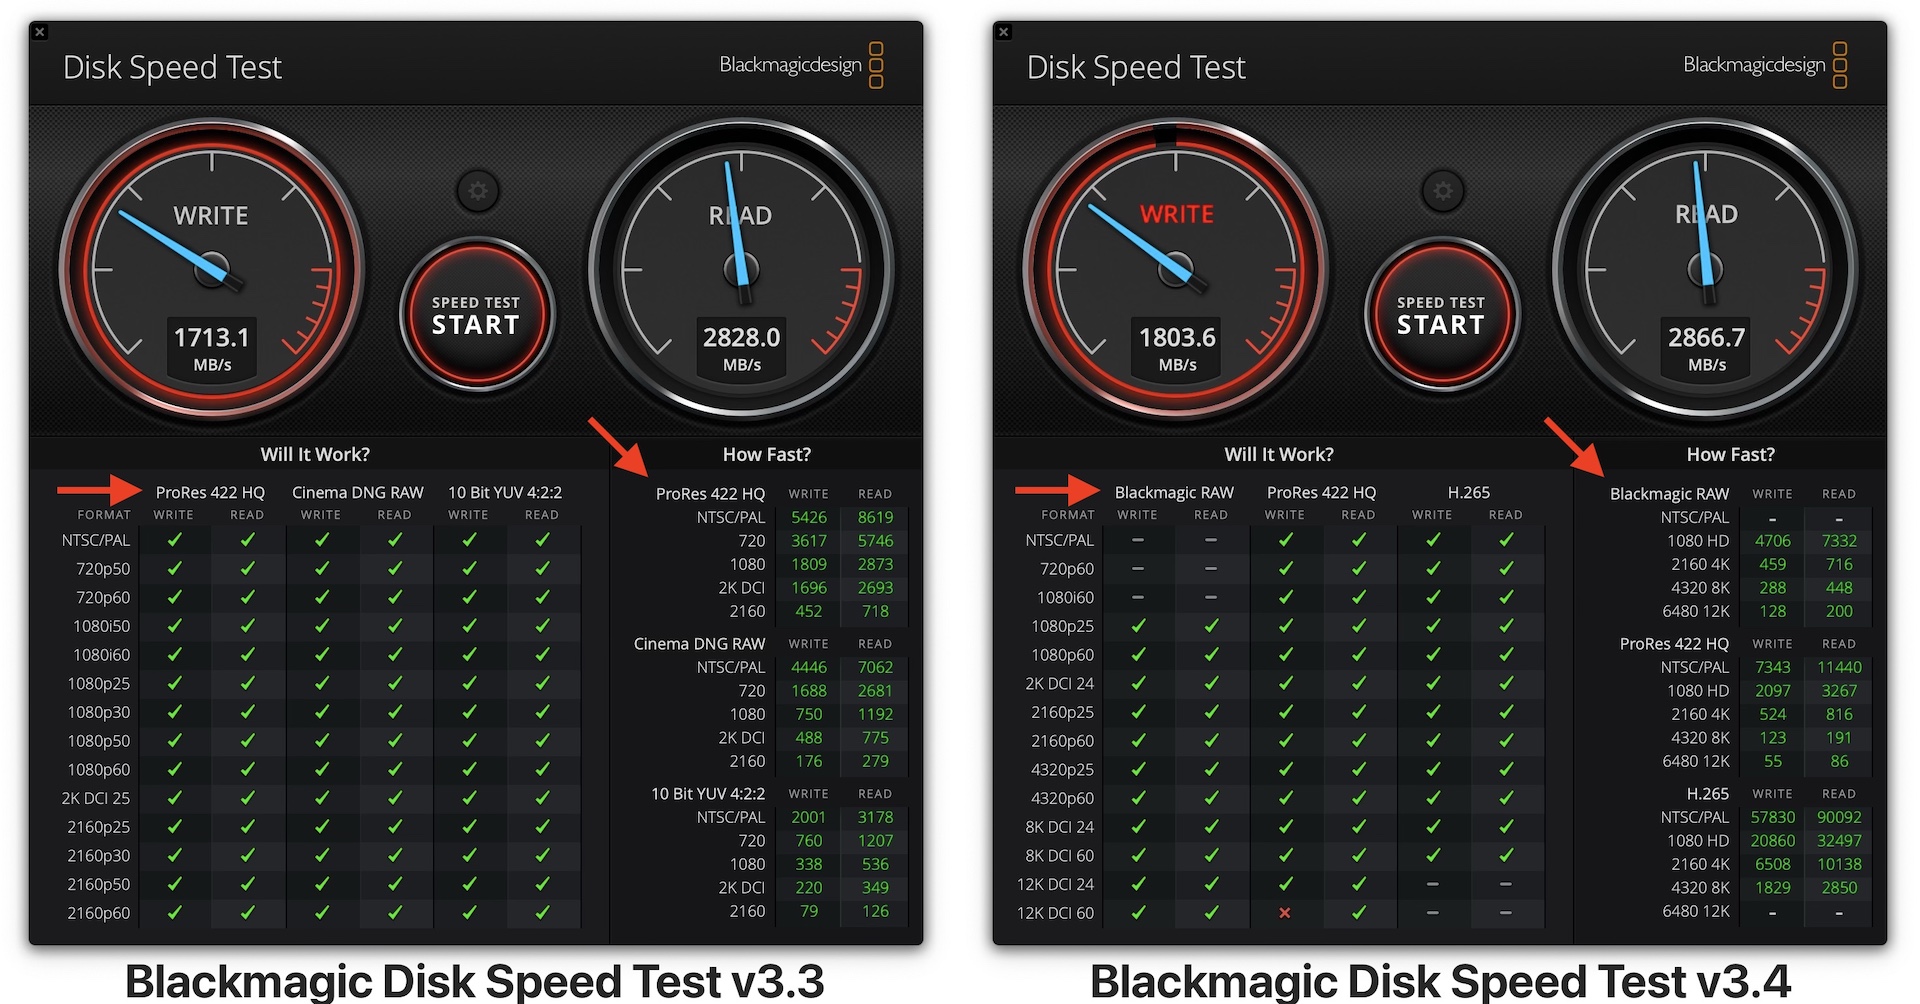 Blackmagic Disk Speed Test v3.4